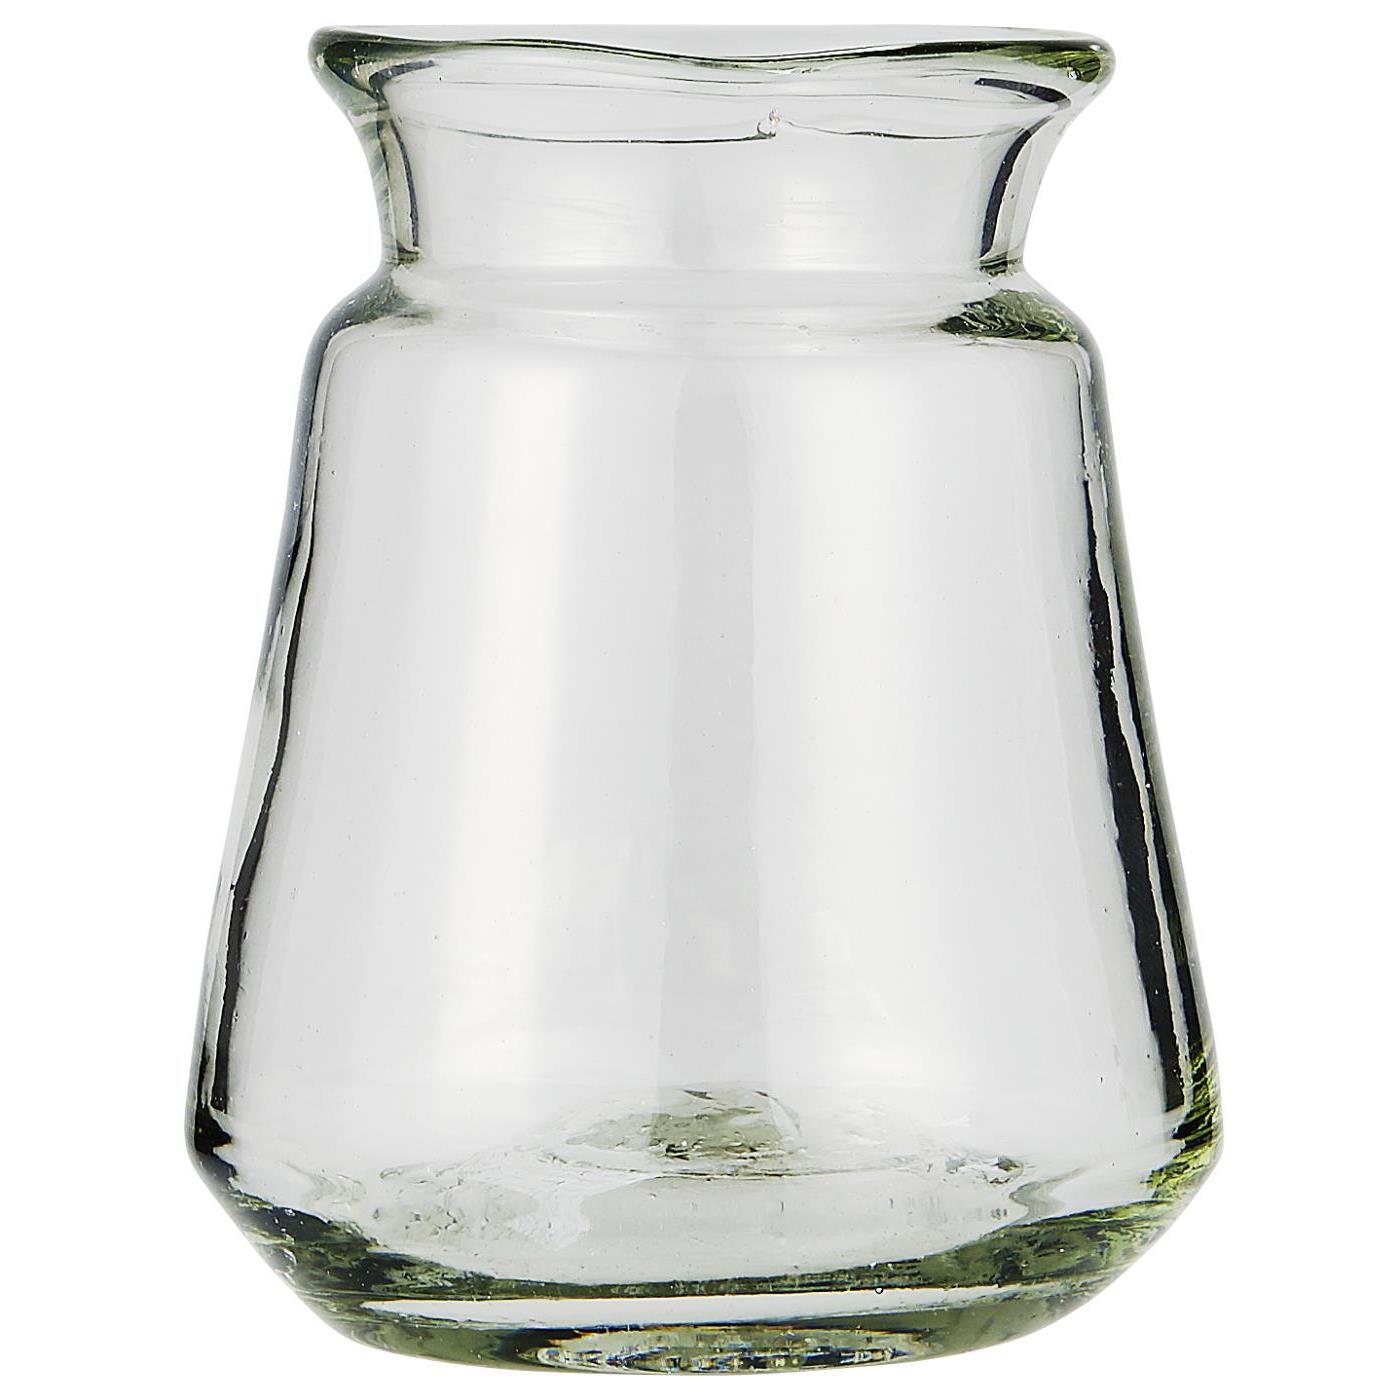 IB Laursen Denmark Clarity Glass Vase